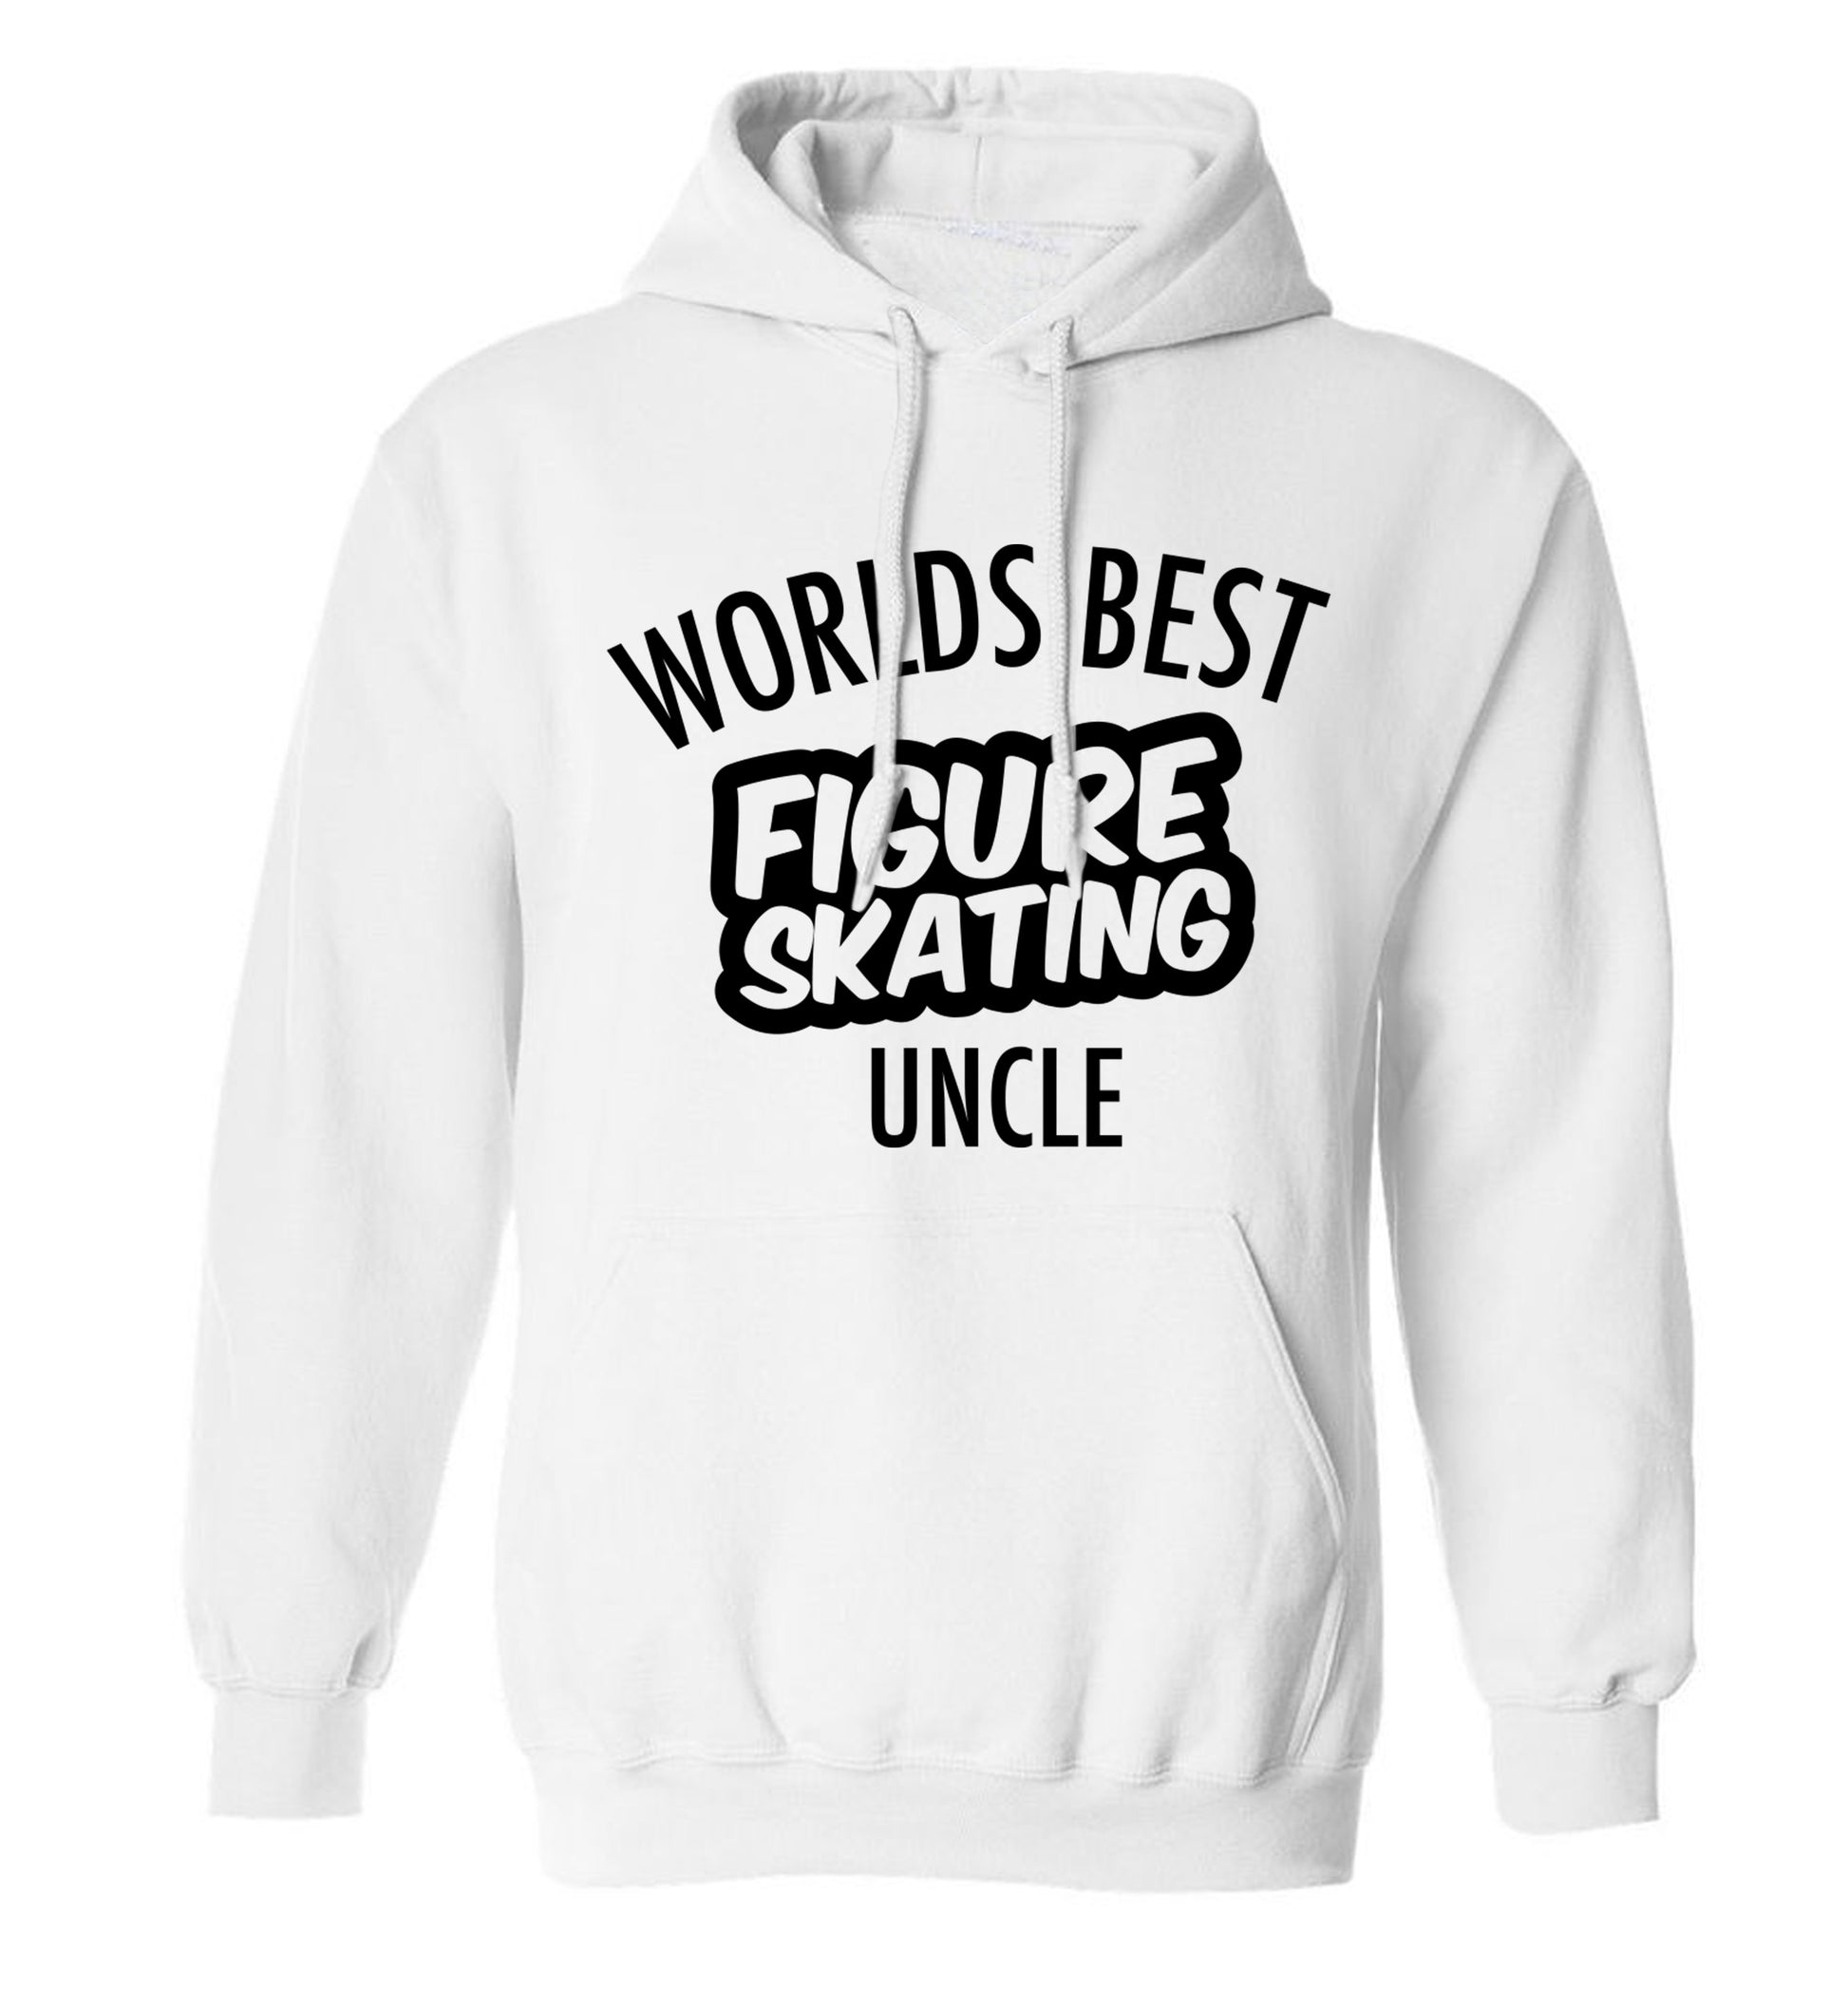 Worlds best figure skating uncle adults unisexwhite hoodie 2XL